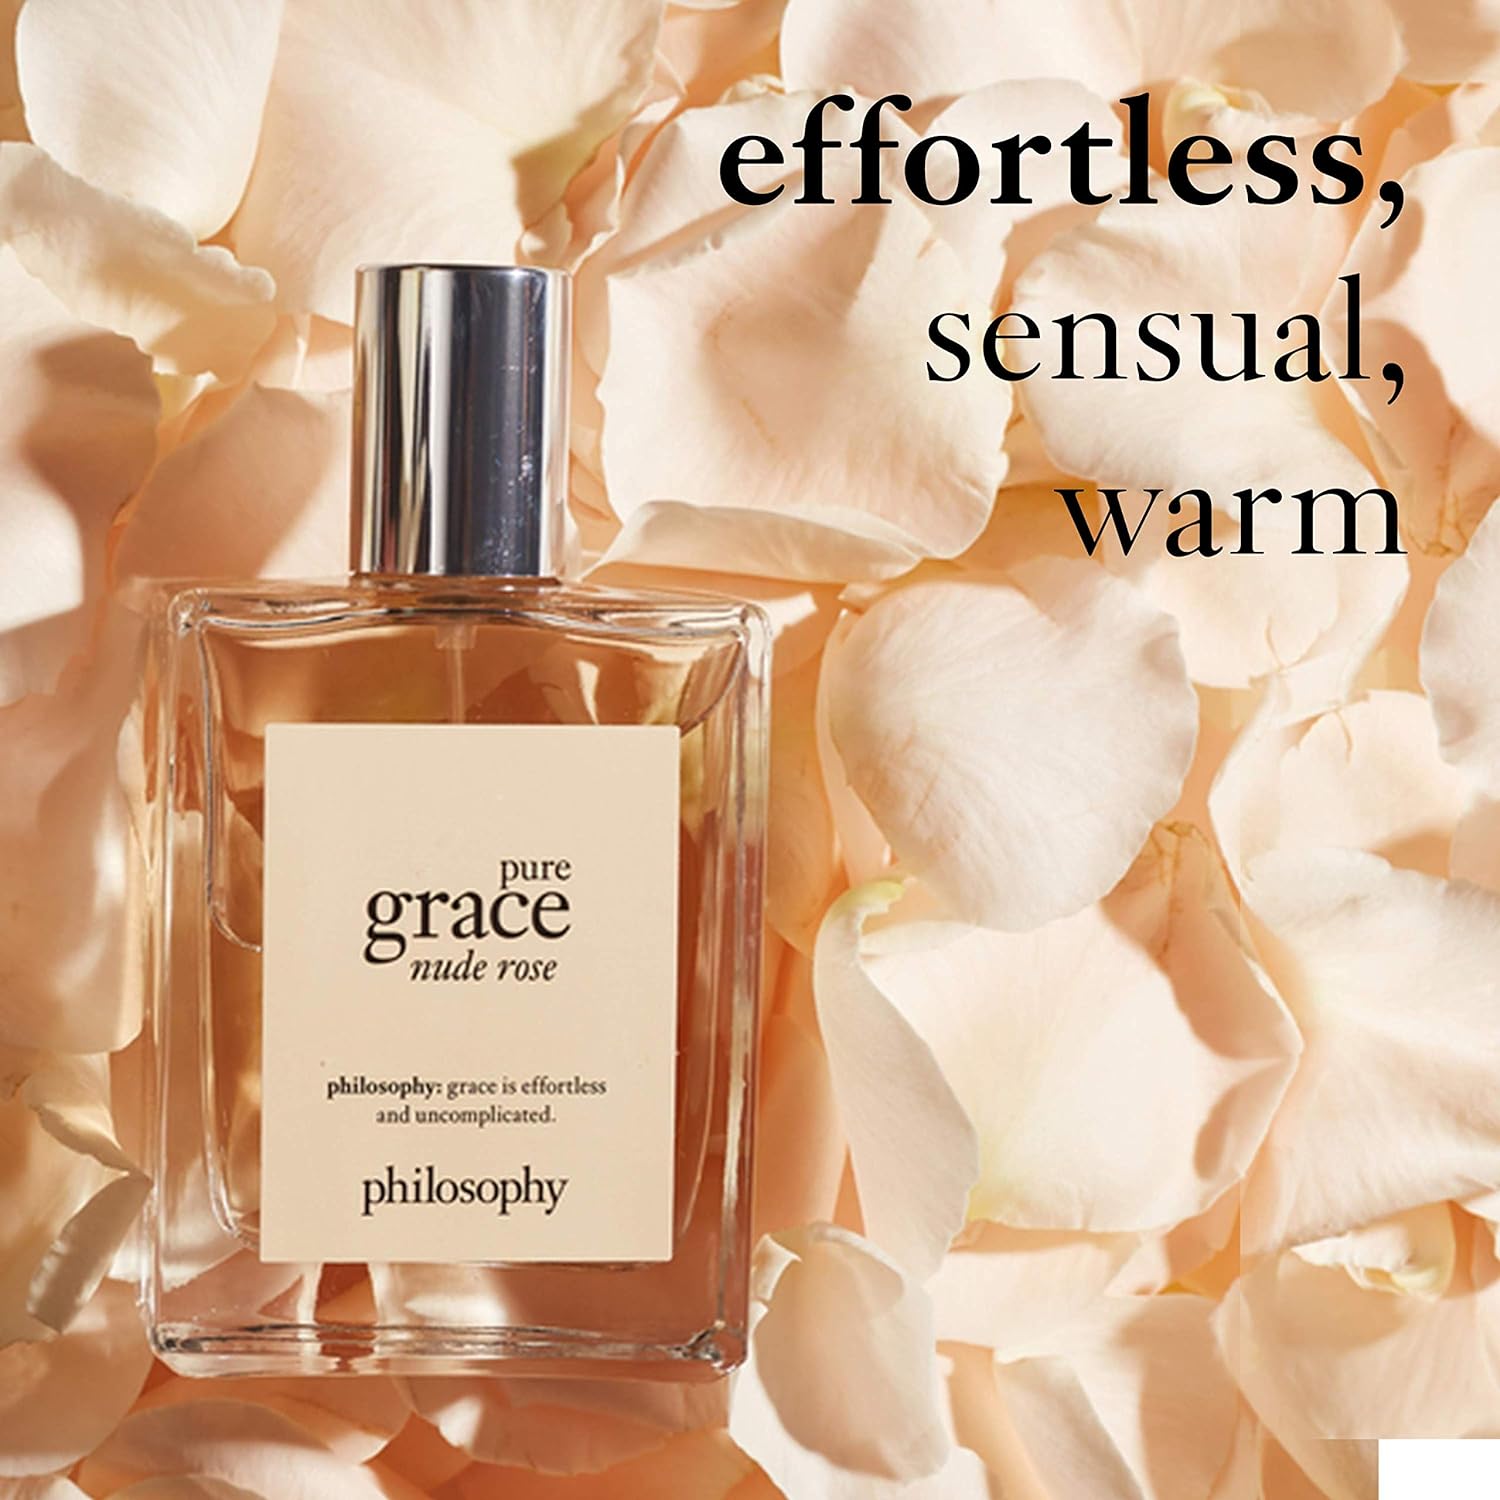 philosophy pure grace nude rose eau de toilette, 0.5 oz : Beauty & Personal Care